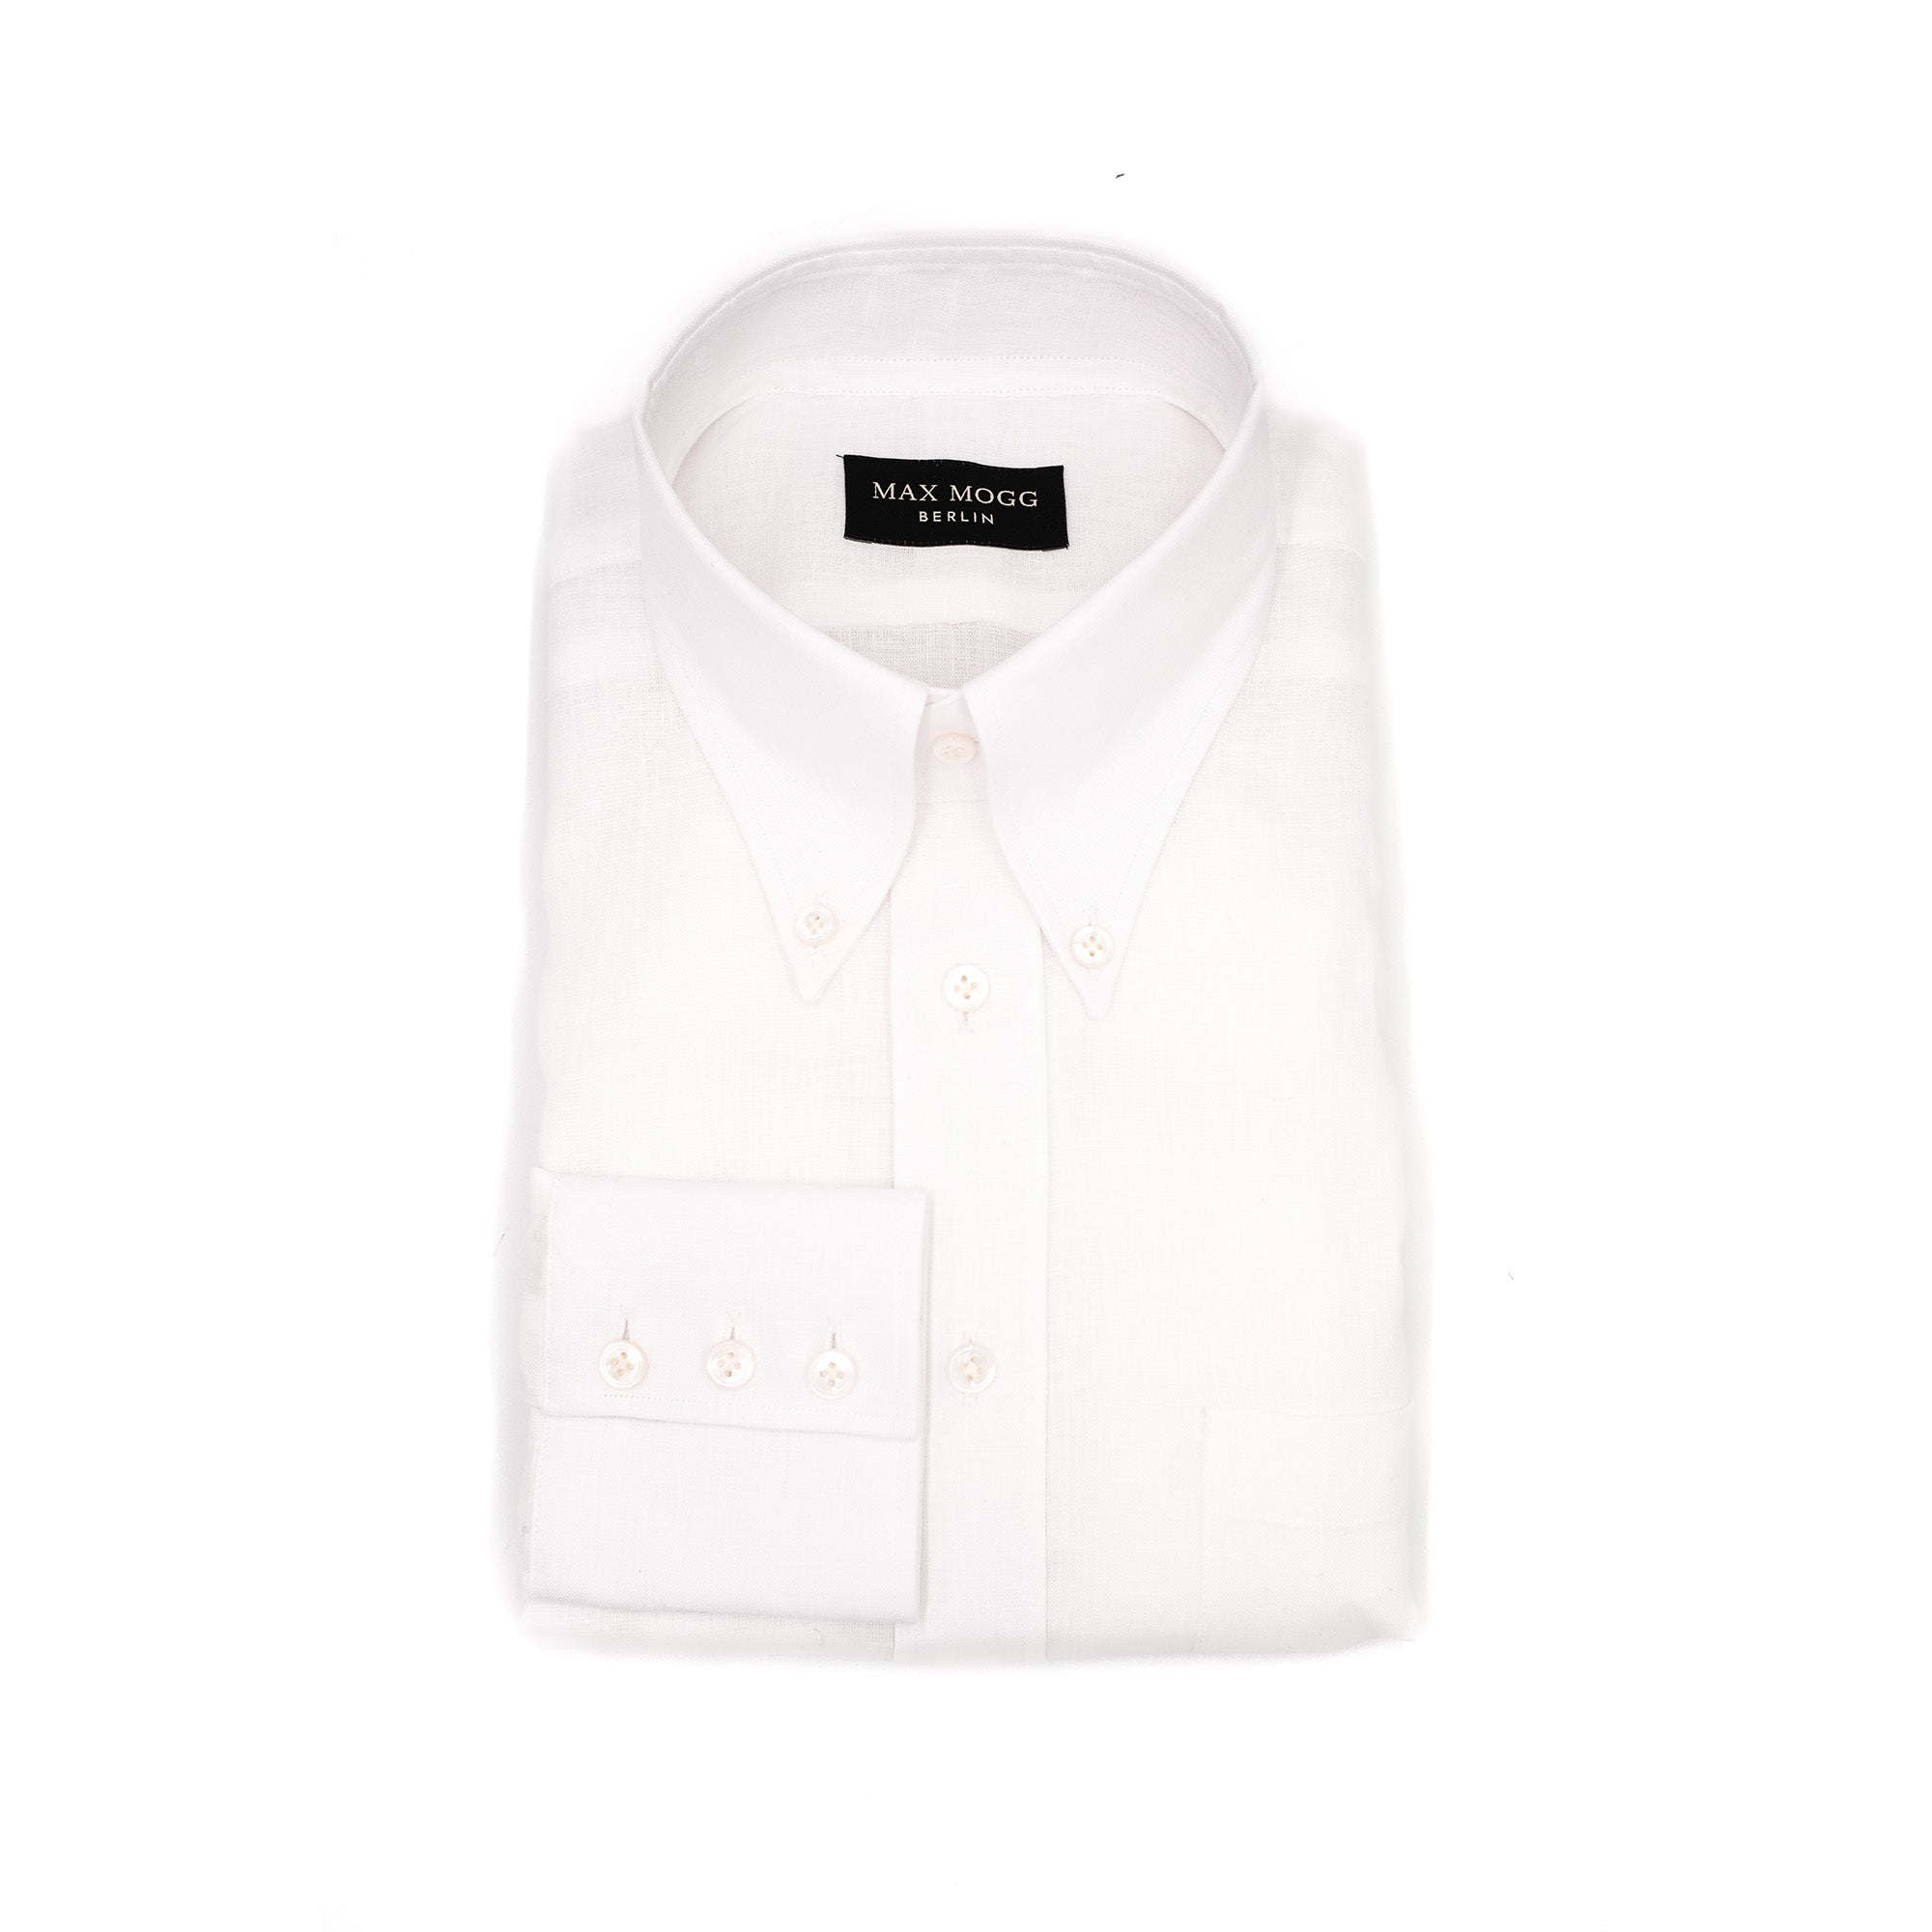 Shirt - White linen button-down